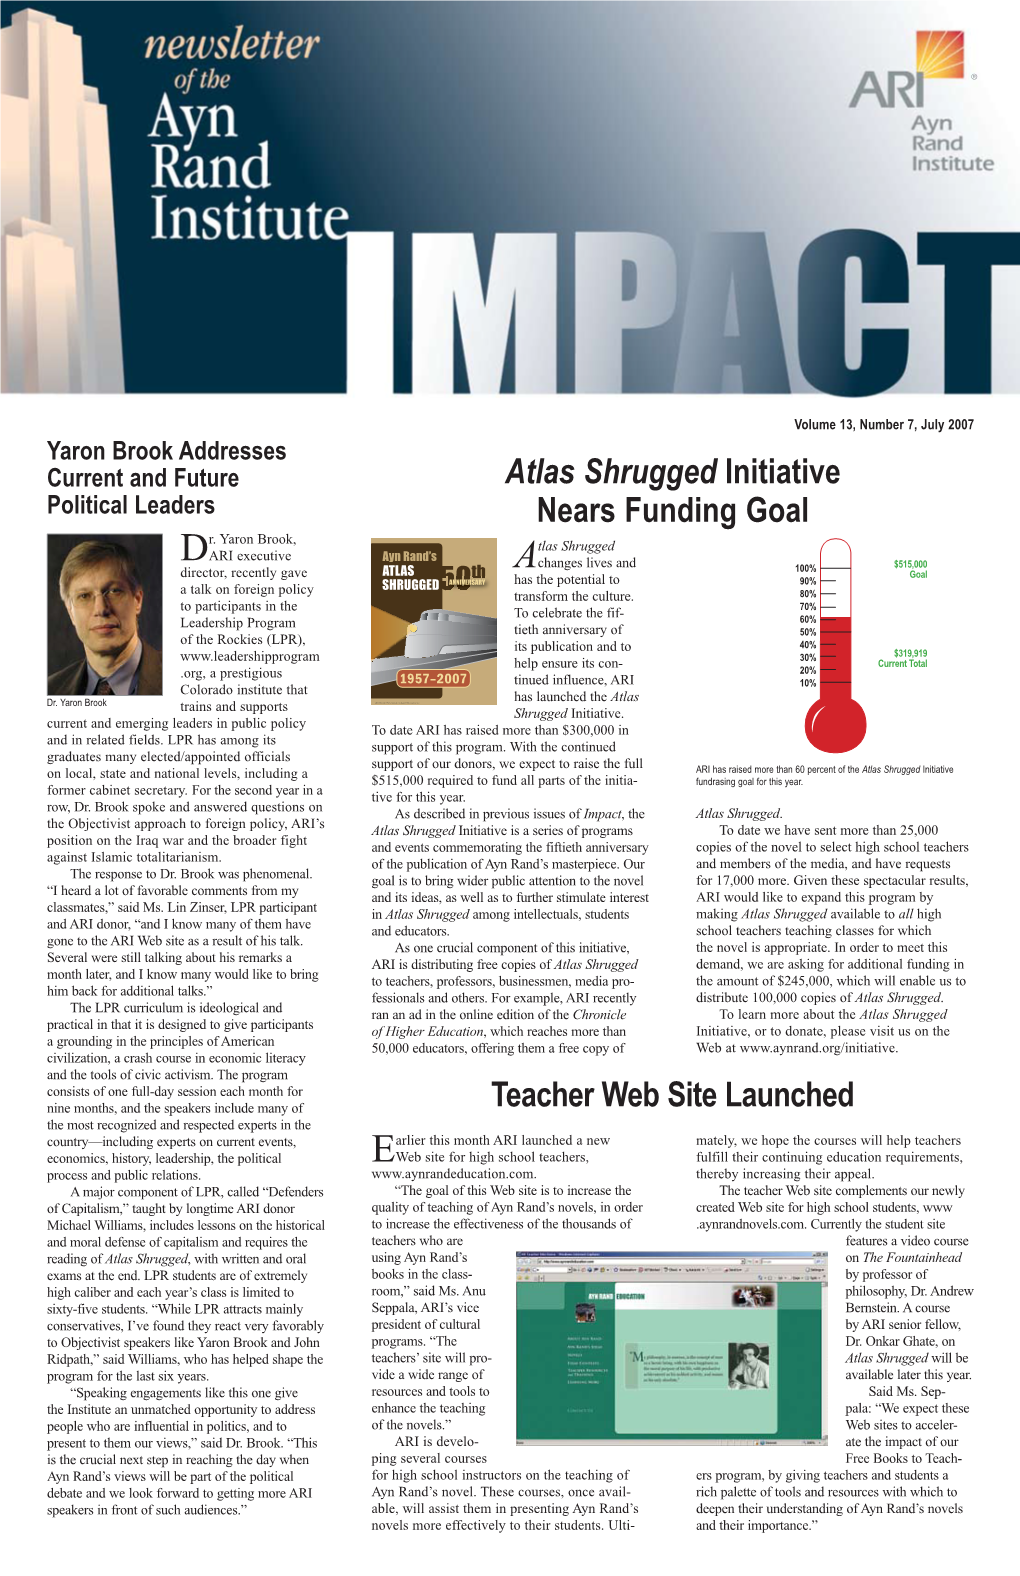 Atlas Shrugged Initiative Nears Funding Goal Teacher Web Site